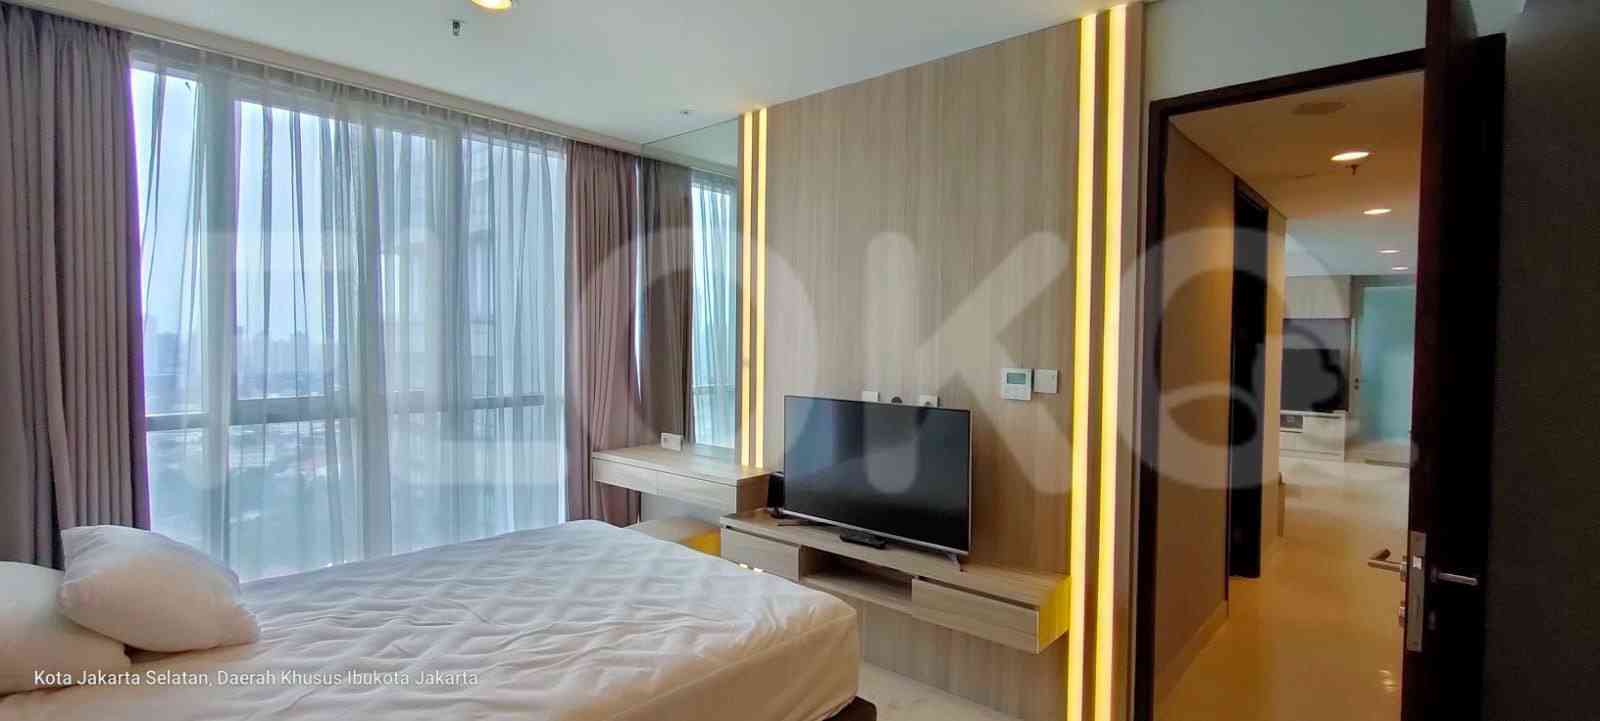 2 Bedroom on 23rd Floor for Rent in Ciputra World 2 Apartment - fkuce7 5